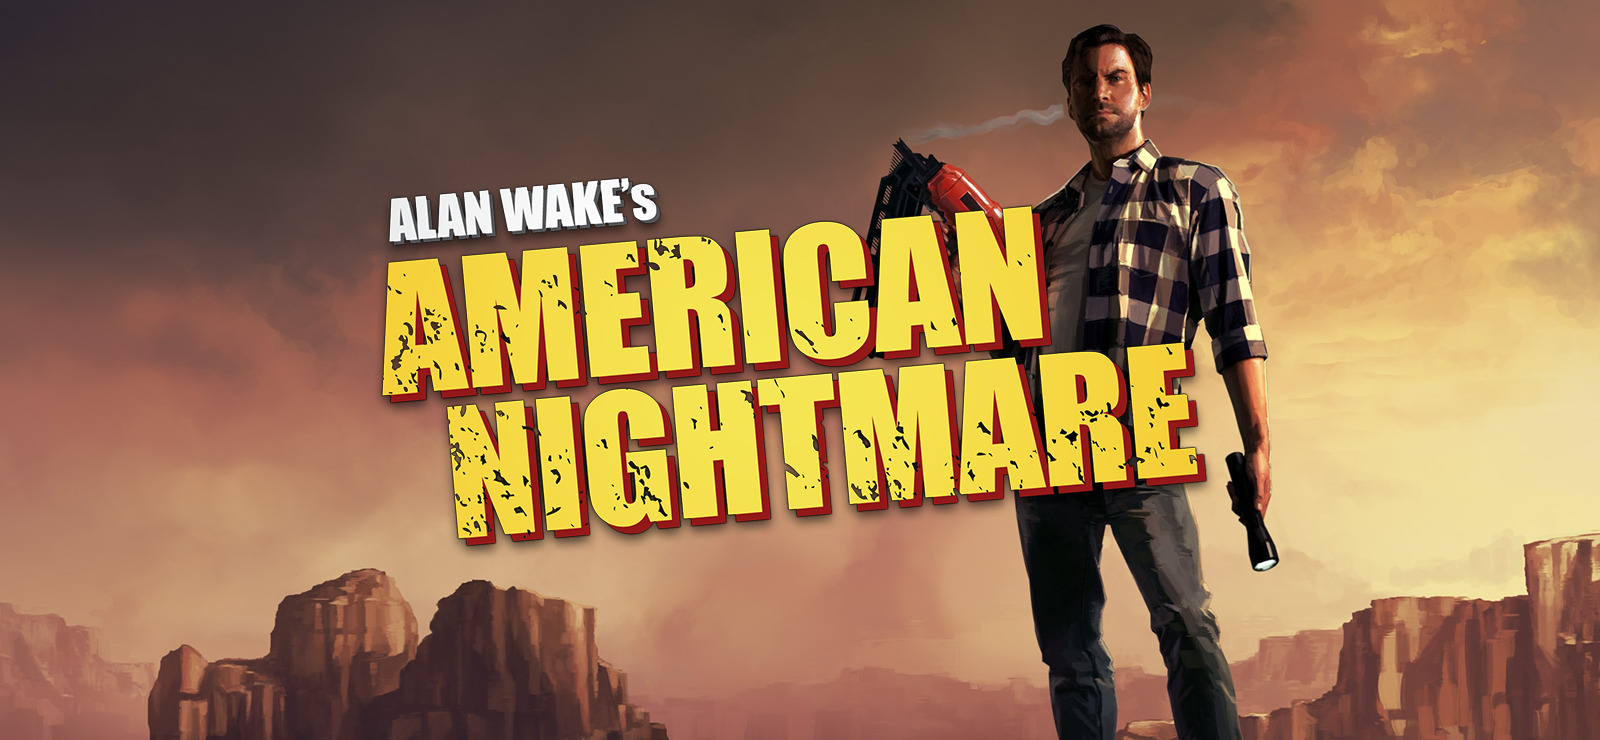 Alan Wake's American Nightmare on GOG.com